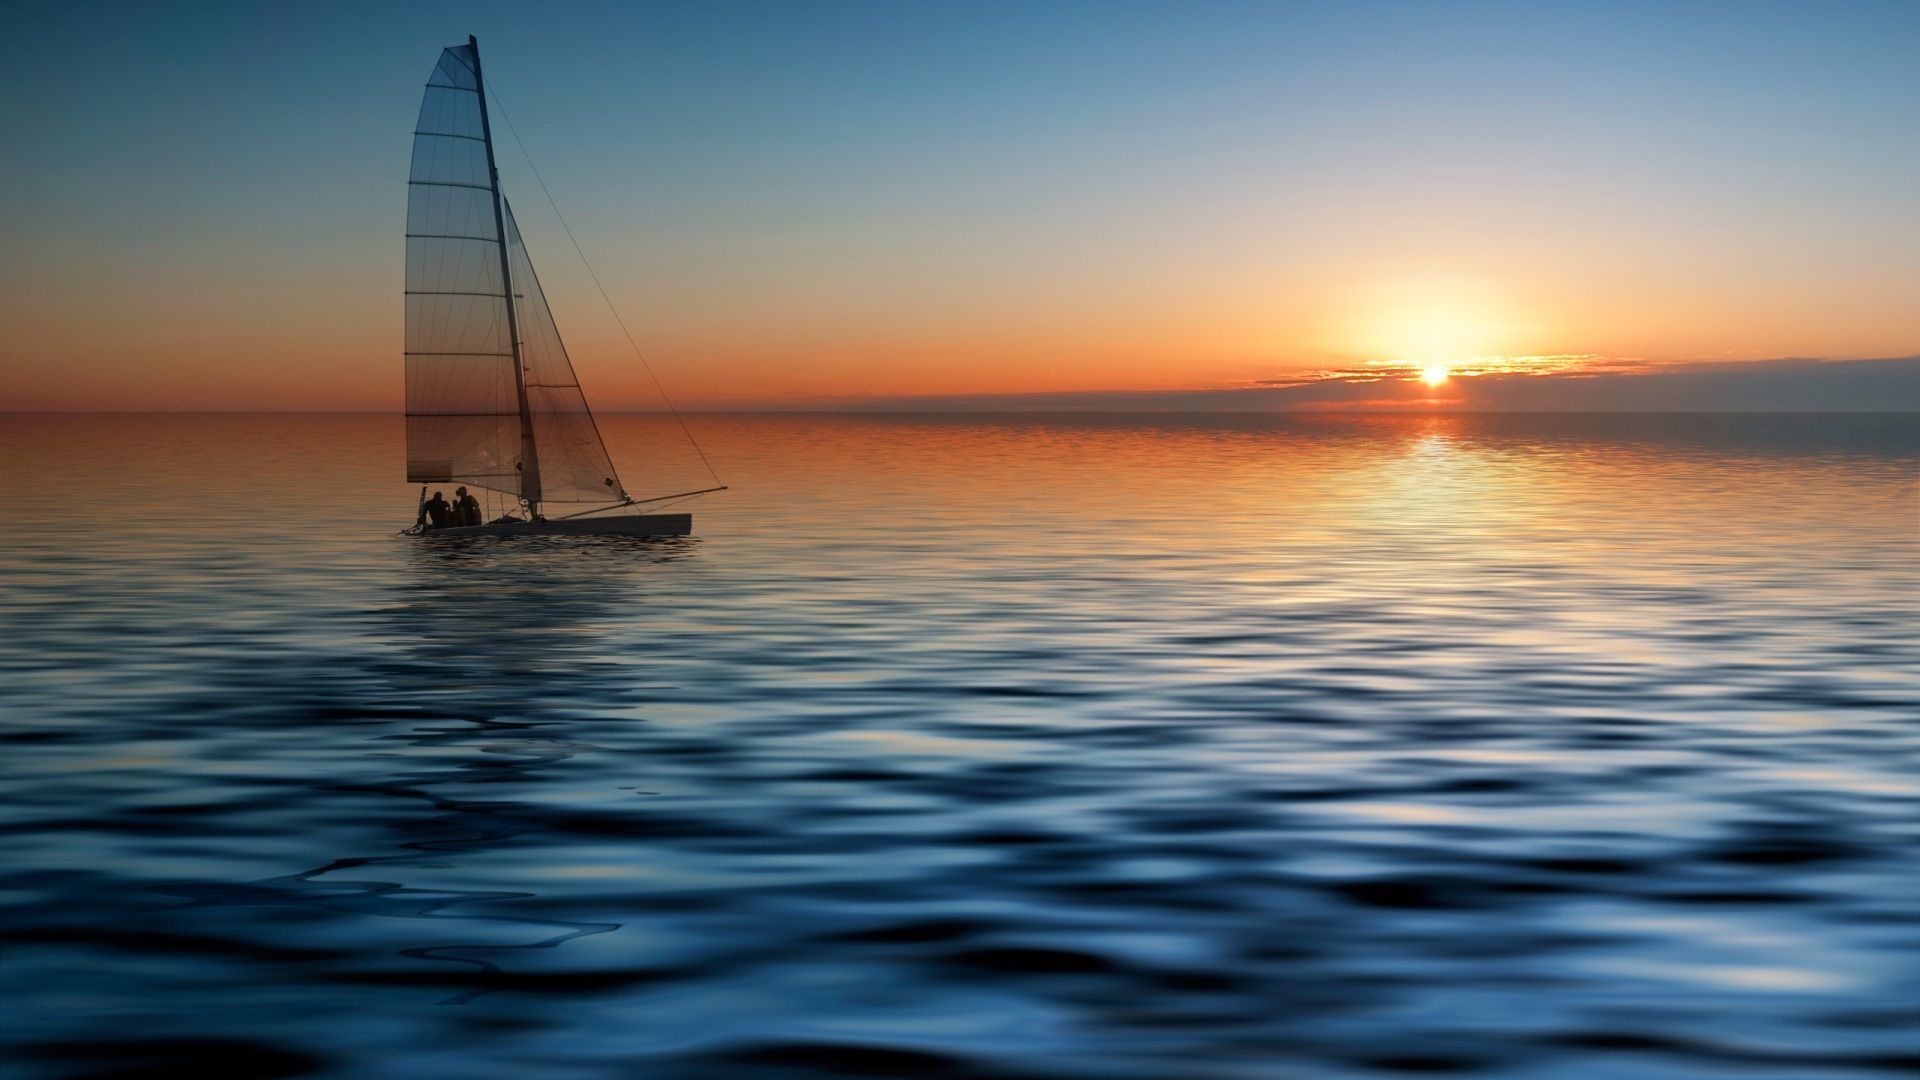 Ultra HD Sailboat Wallpaper 4i6a8k9 Sunset Boat